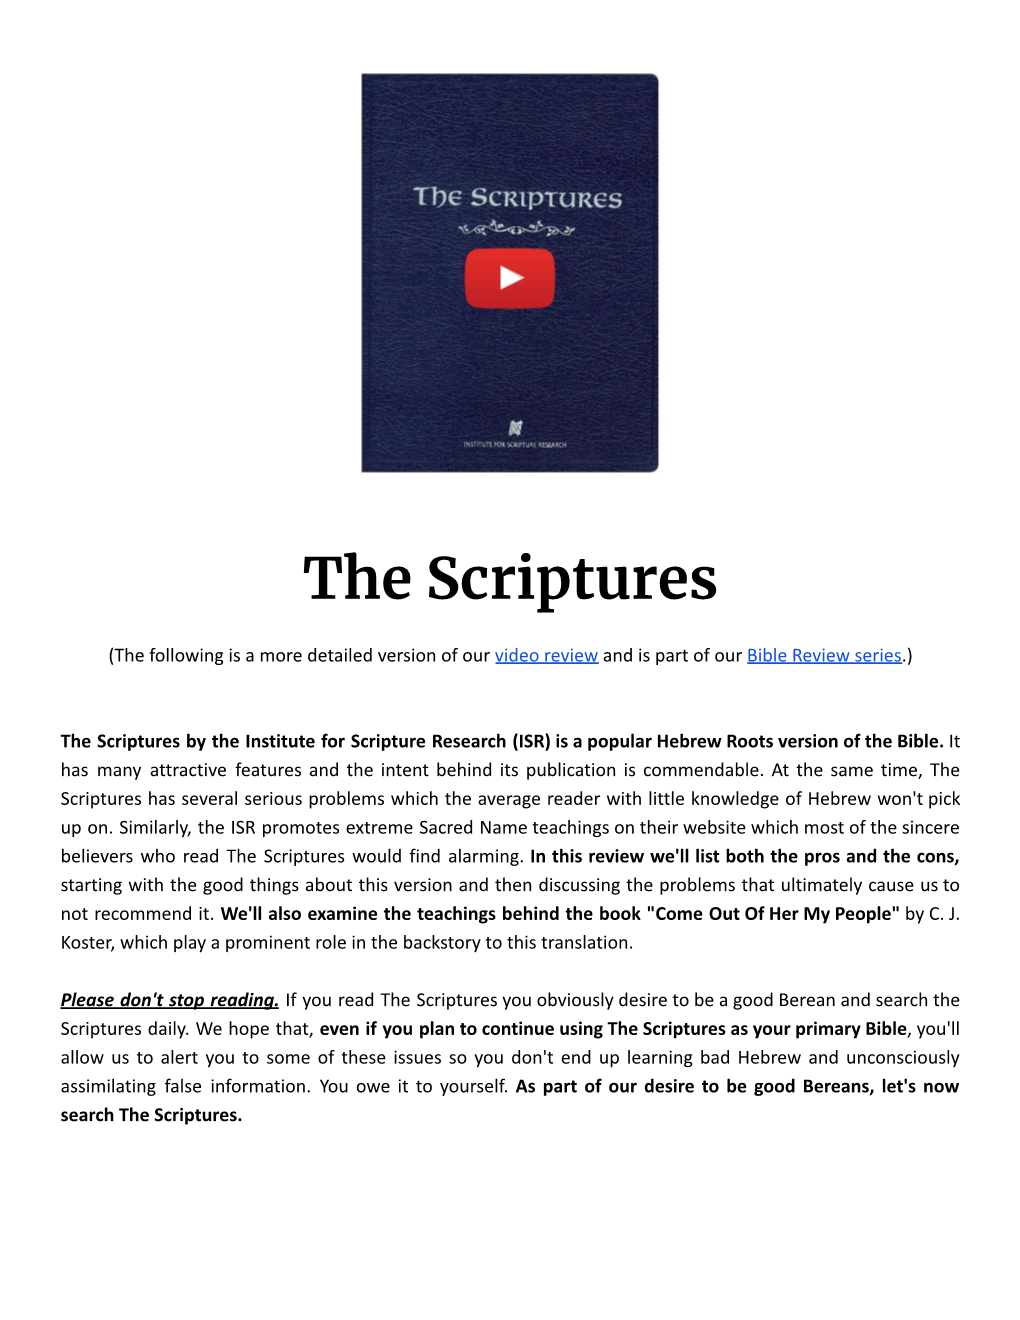 "The Scriptures" Bible